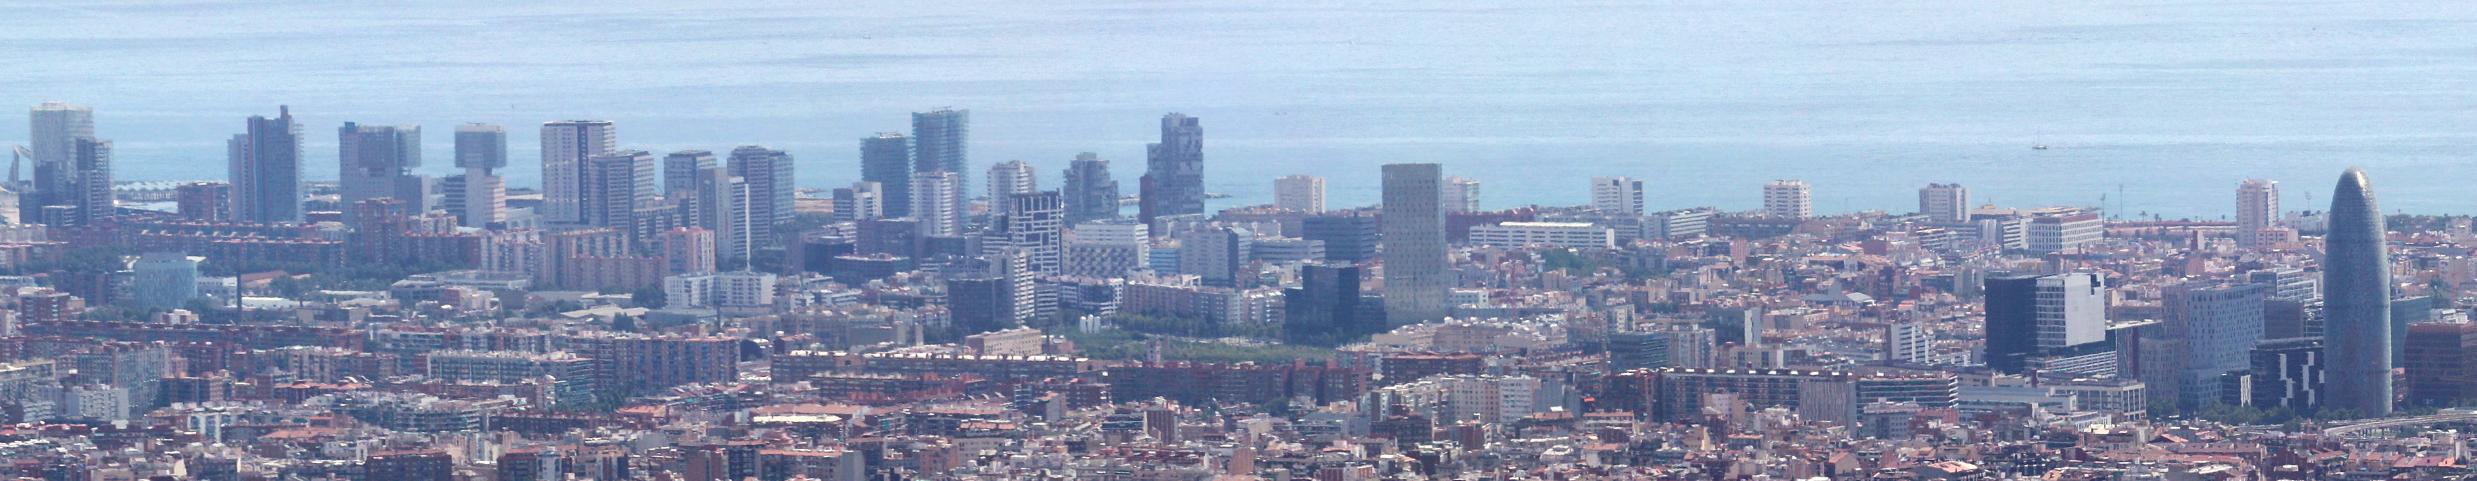 http://upload.wikimedia.org/wikipedia/commons/3/3c/Skyscrapers_in_Diagonal_Mar%2C_Barcelona.jpg